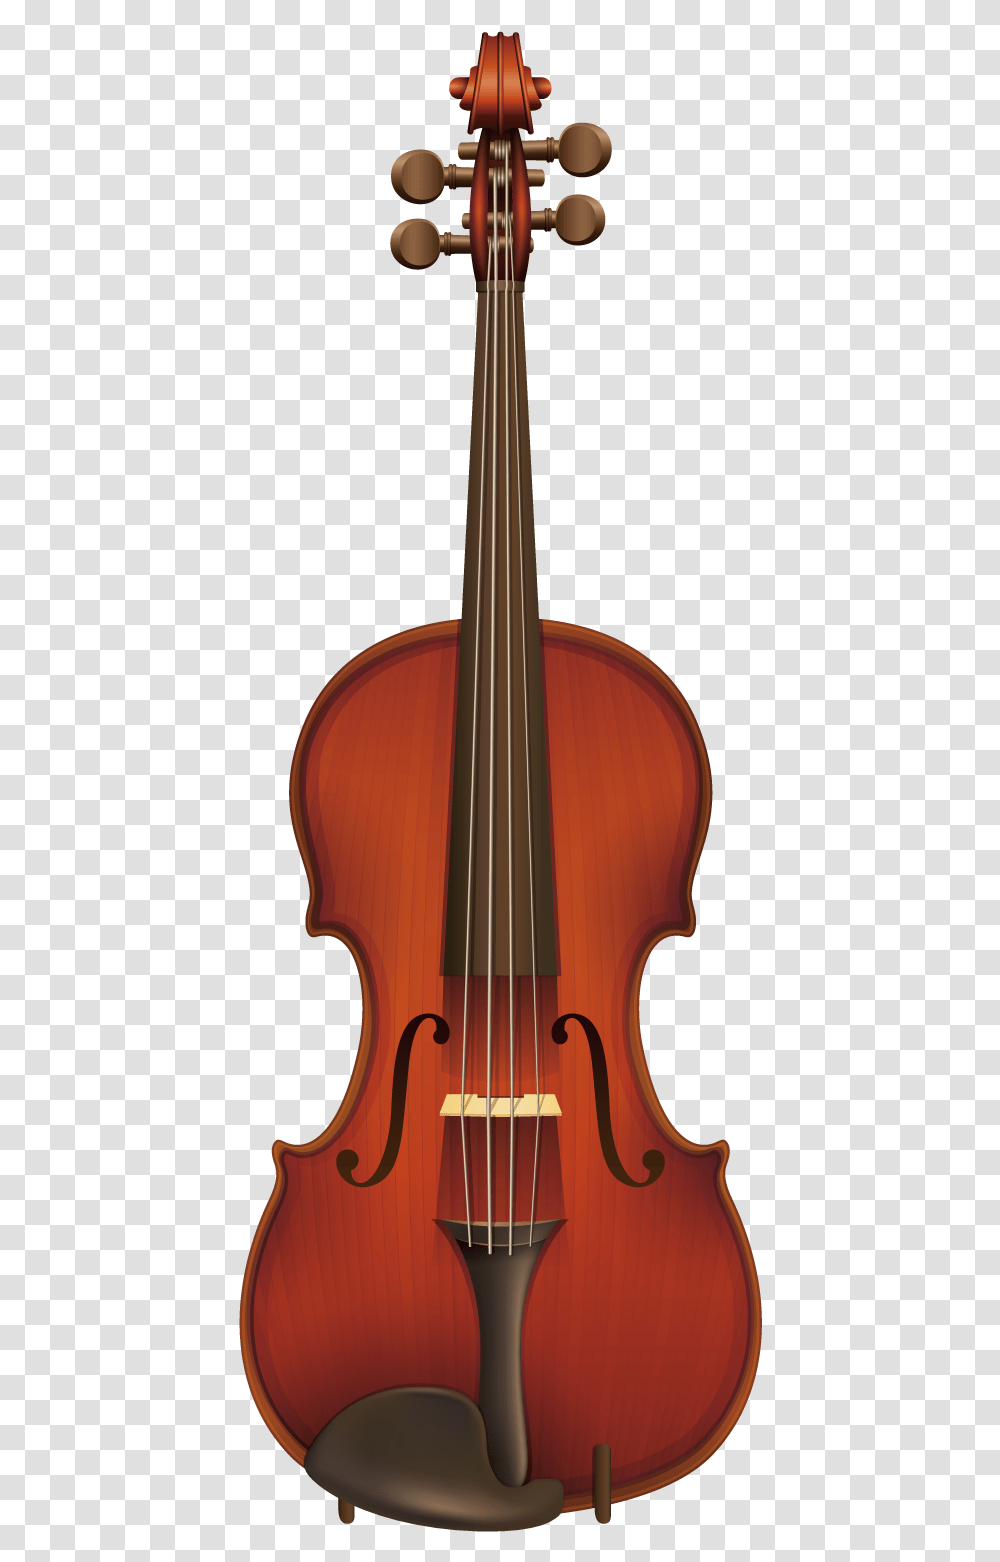 Ukulele Musical Instrument Violin Viola Music Instruments Violin, Leisure Activities, Fiddle, Cello, Guitar Transparent Png